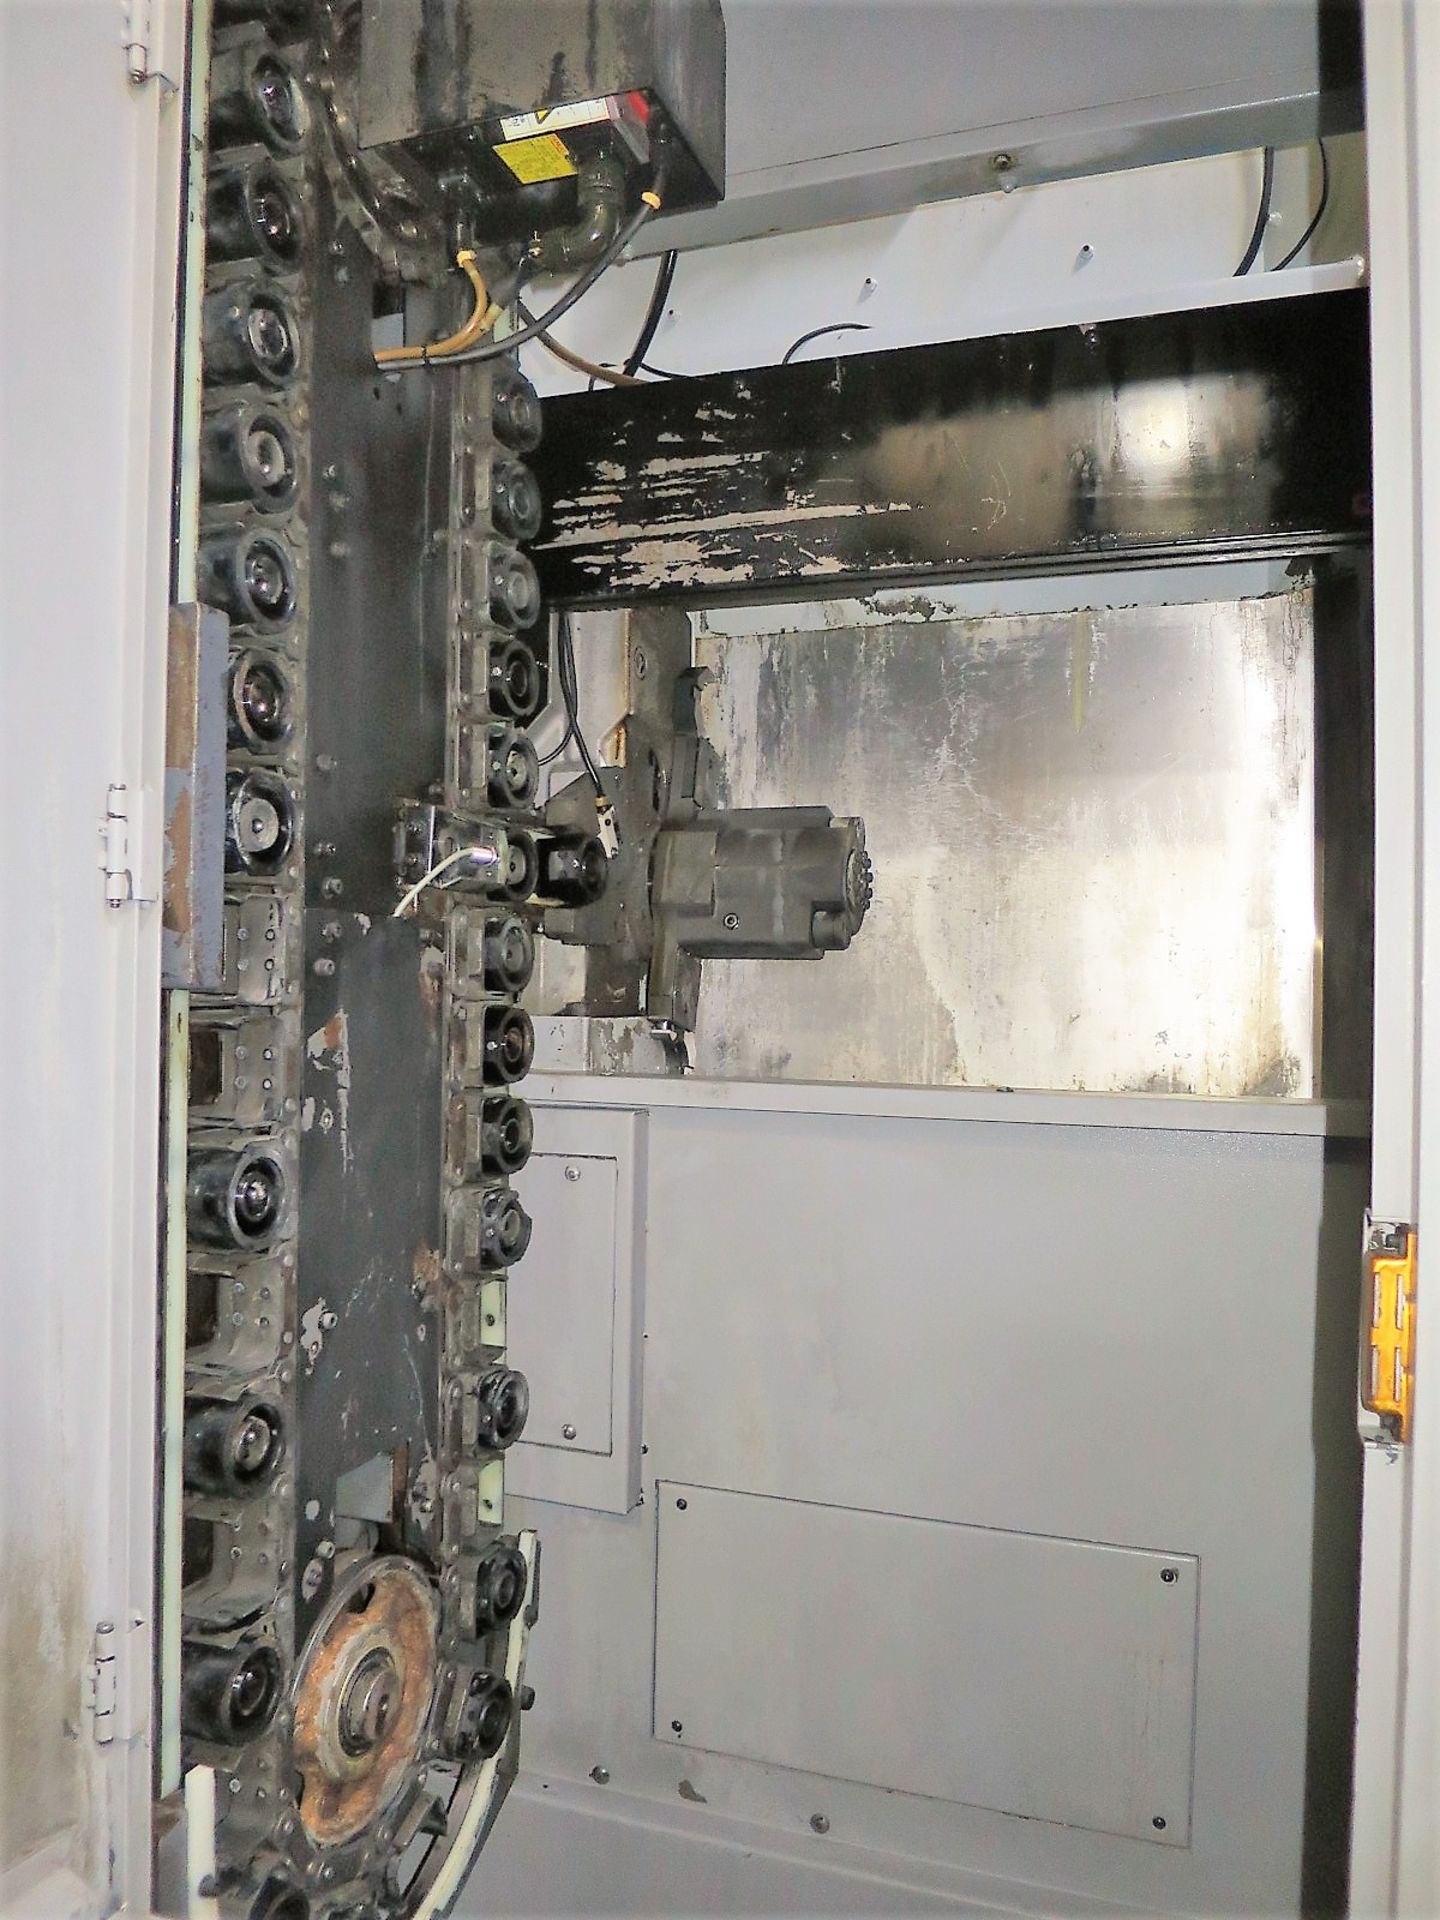 MORI SEIKI NH5000/40 DCG CNC PRECISION HIGH SPEED HORIZONTAL MACHINE, S/N NH502GC0336, NEW 2007 - Image 7 of 11